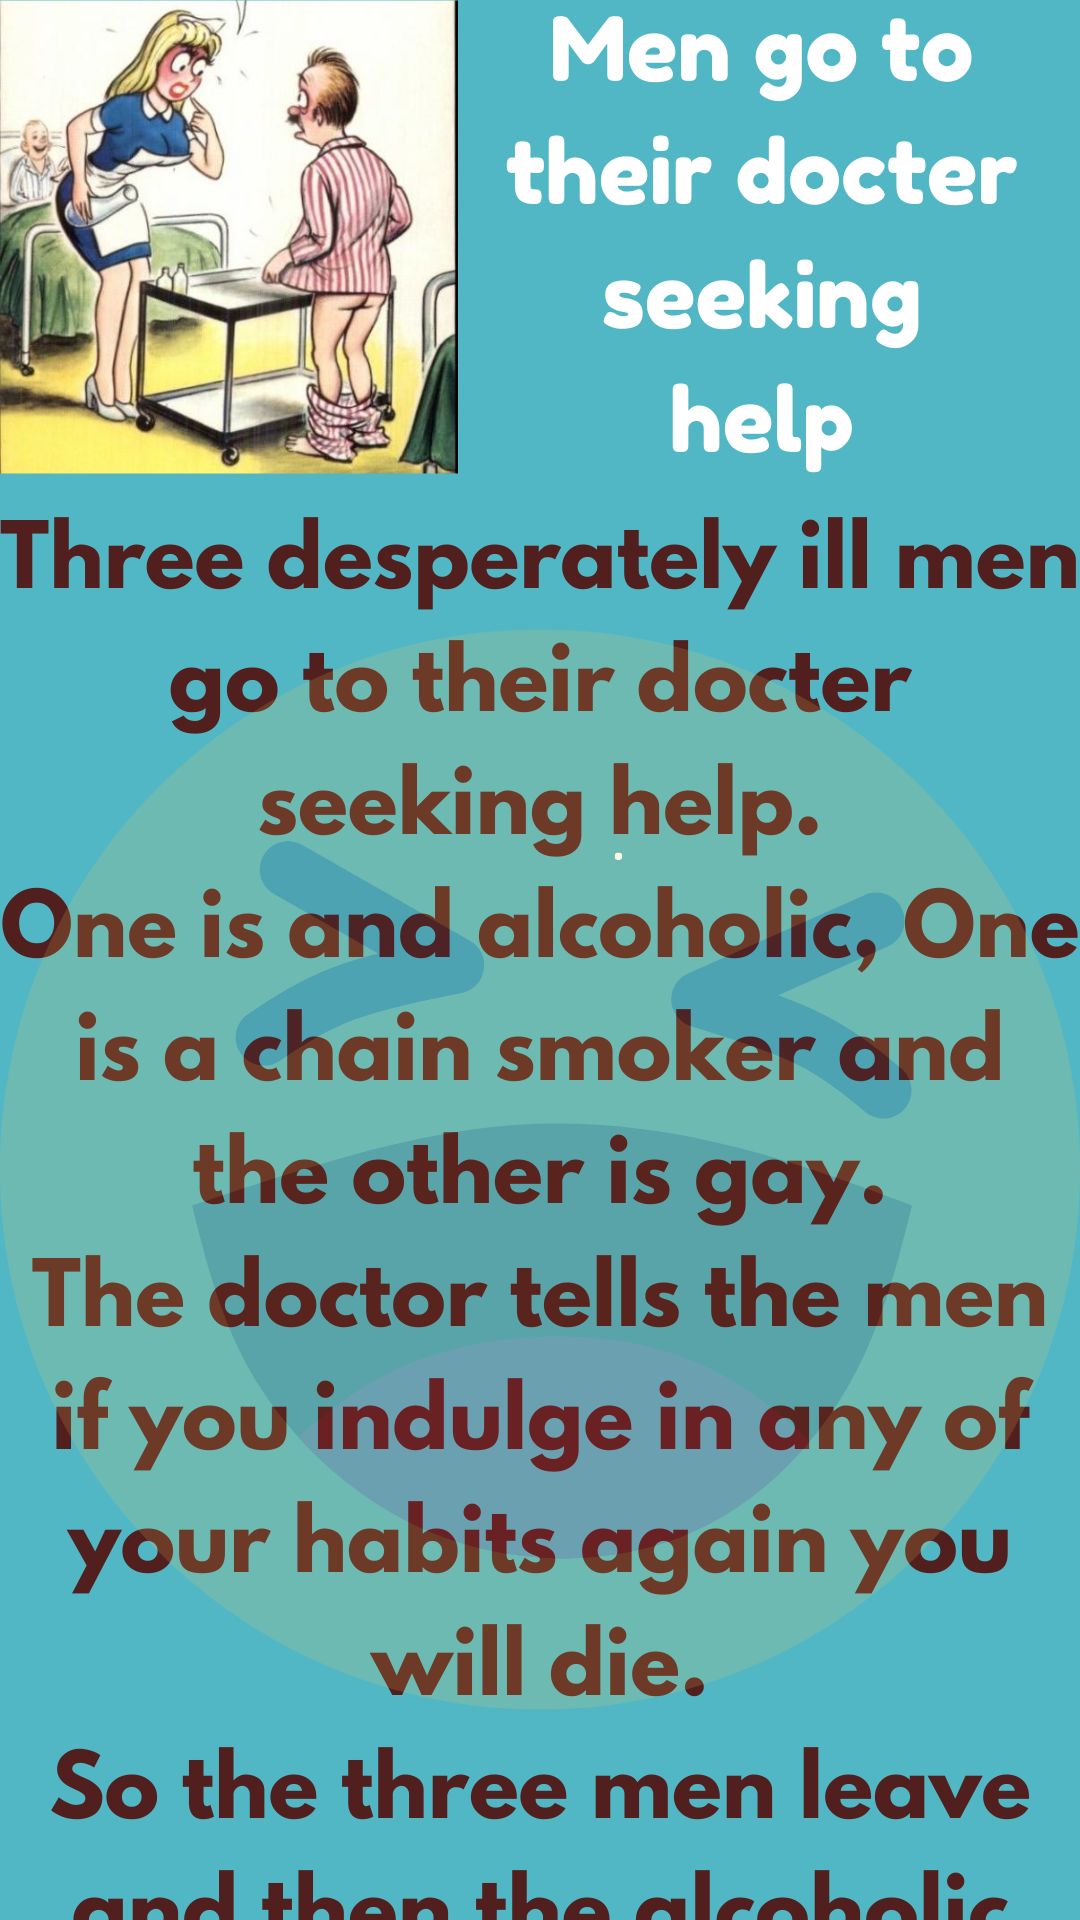 Men go to their docter seeking help